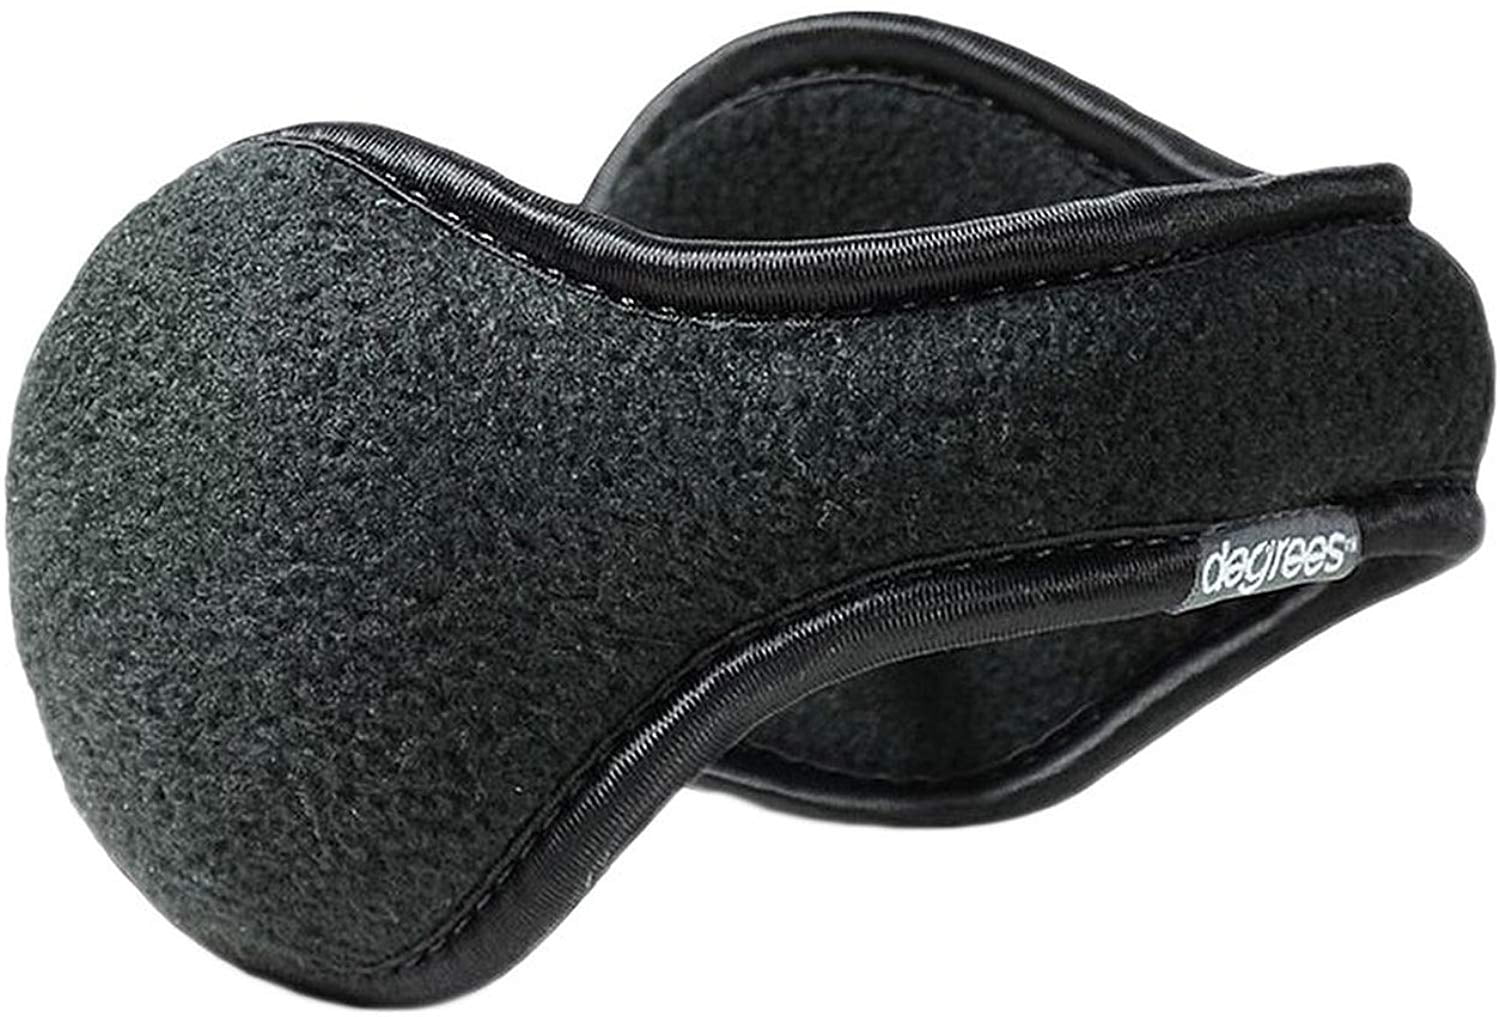 NEW 180s Urban Soft Shell Black Ear Warmers Adjustable Behind the Head 